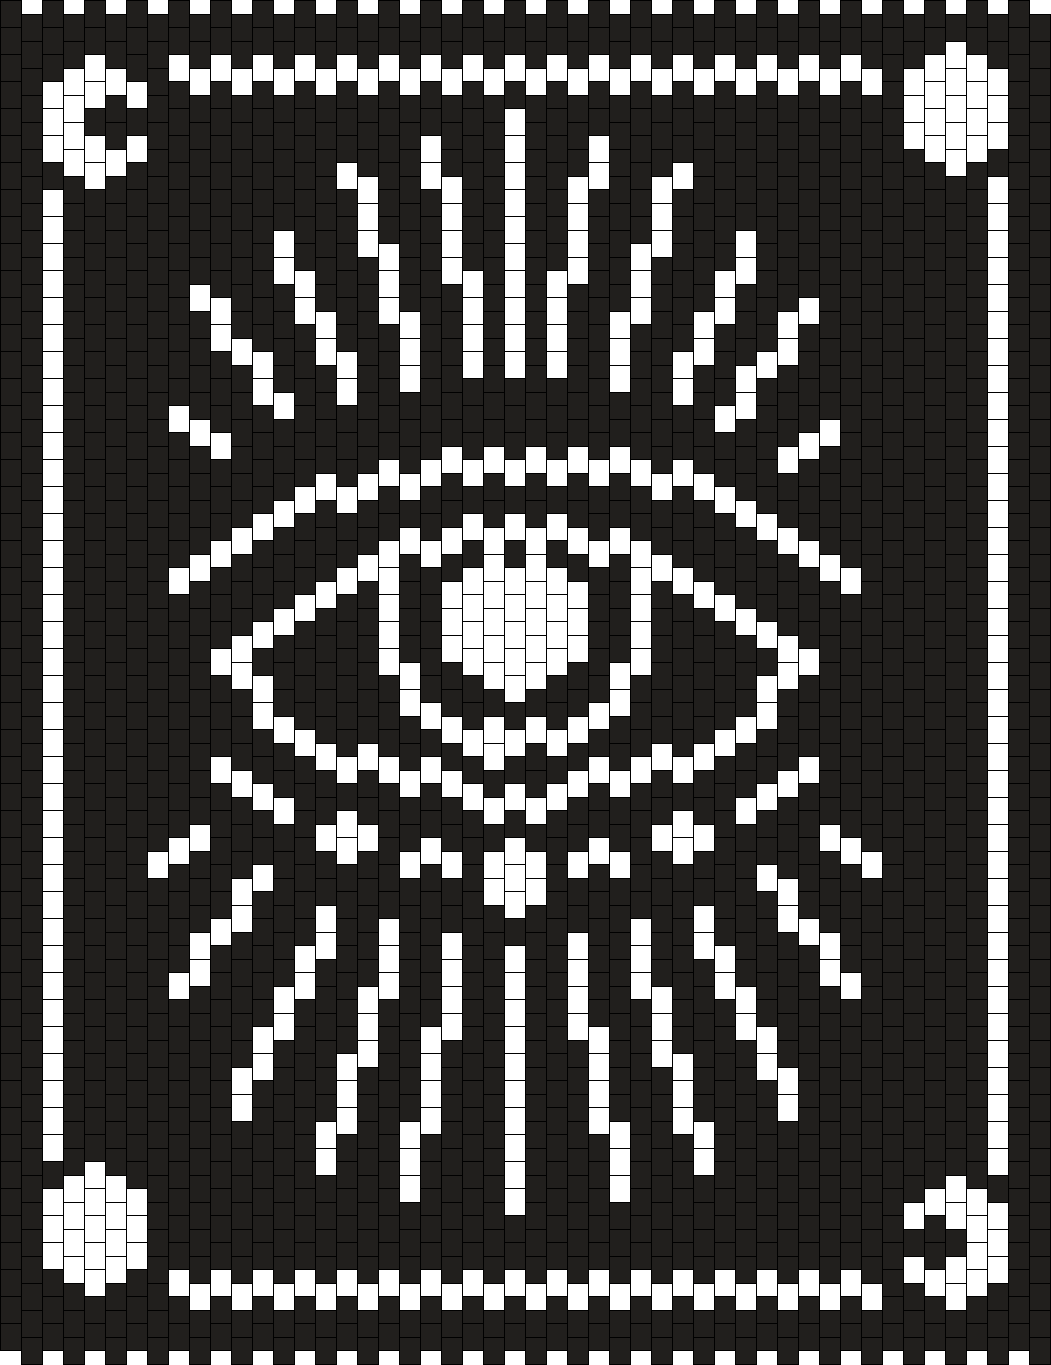 Eye Tapestry